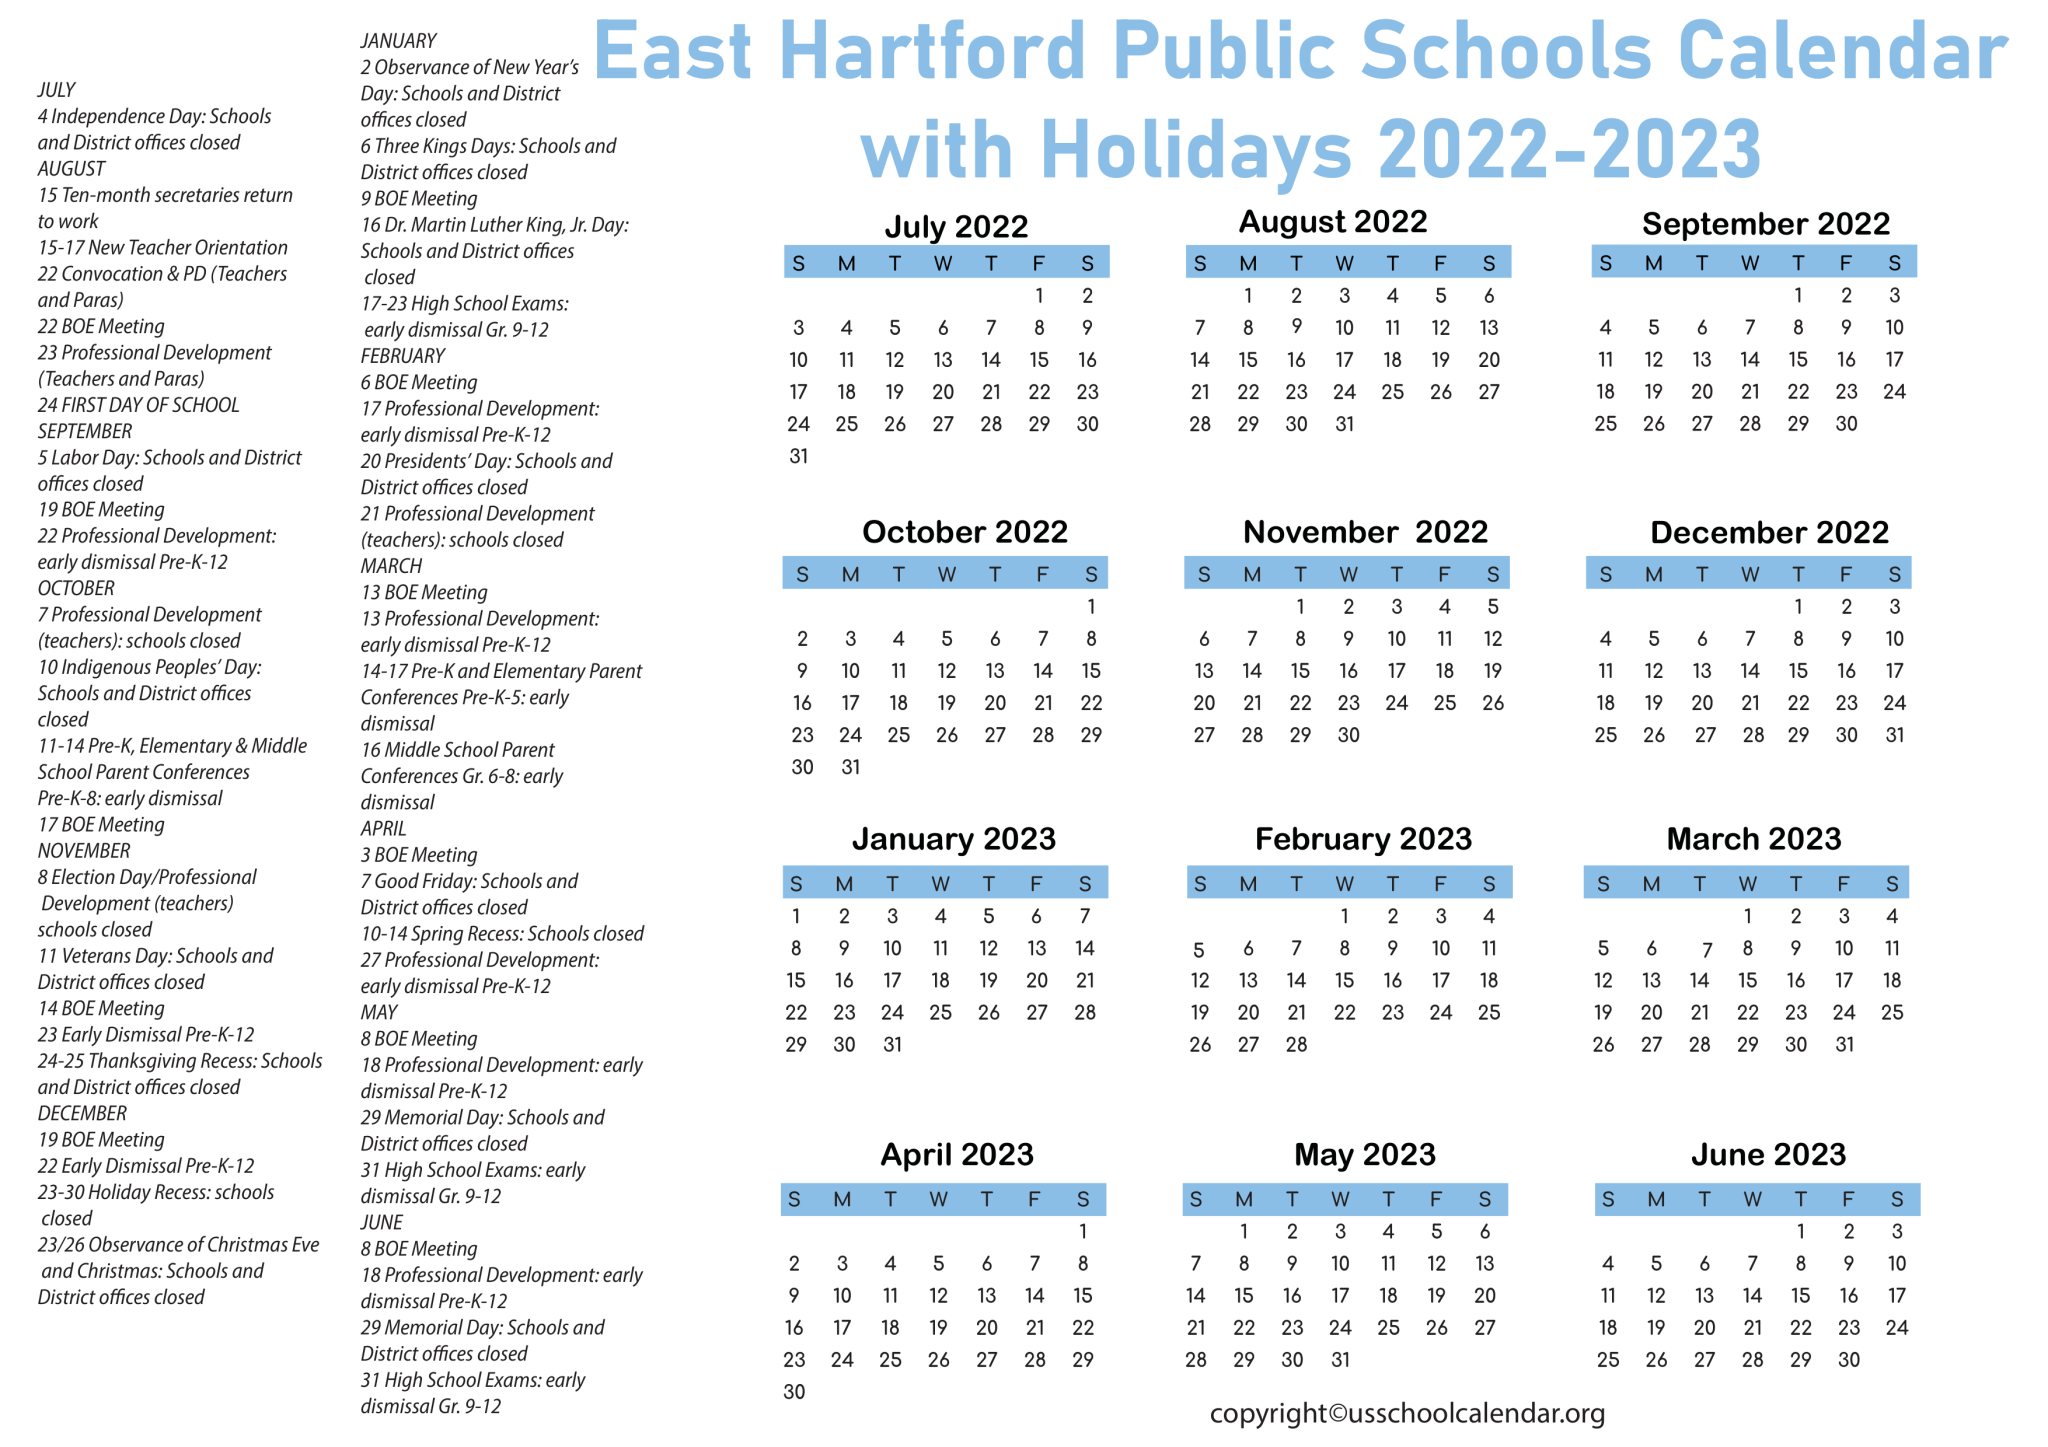 East Hartford Public Schools Calendar with Holidays 2023